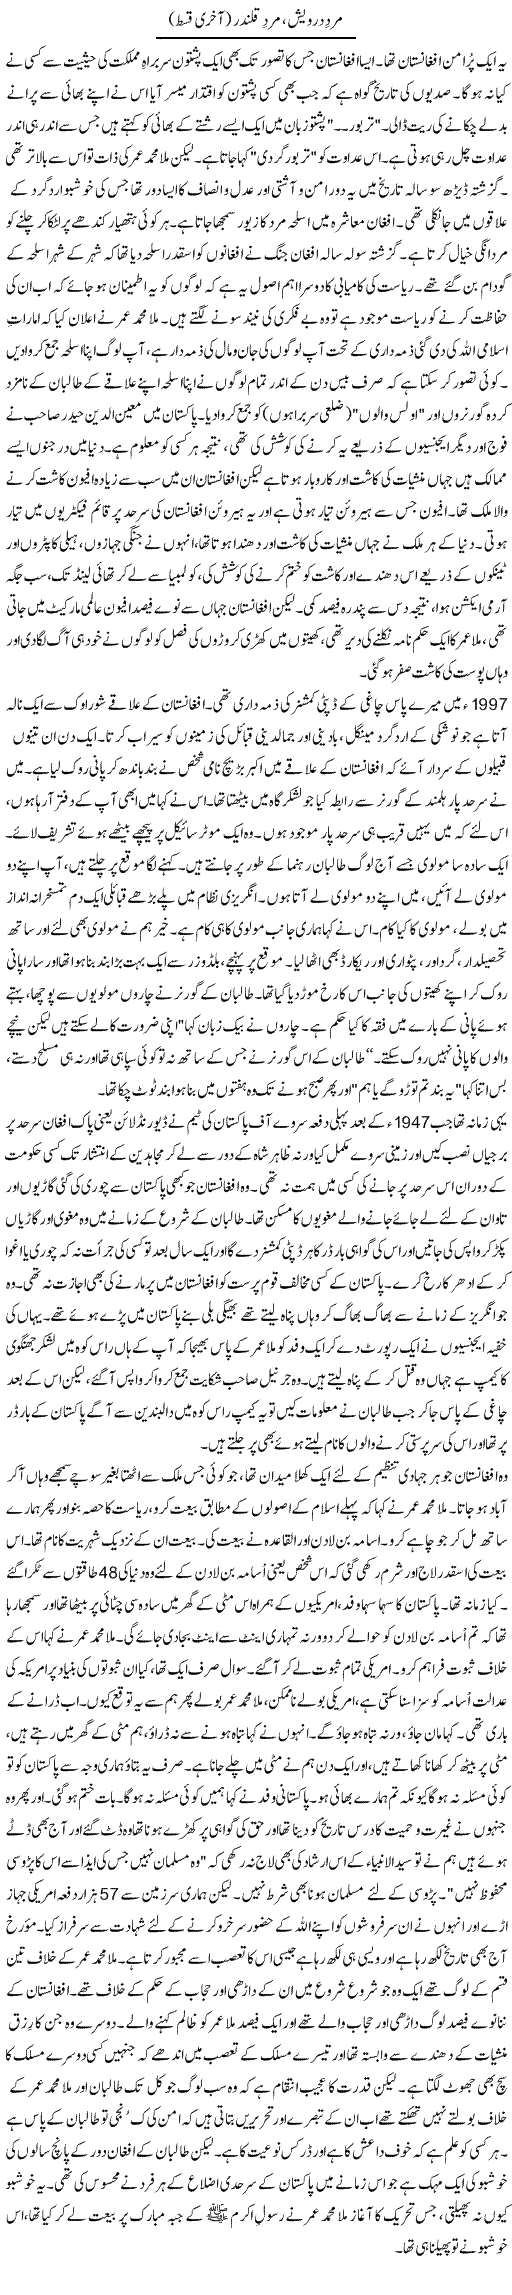 Mard e Darwaish, Mard Qalandar (2) | Orya Maqbool Jan | Daily Urdu Columns